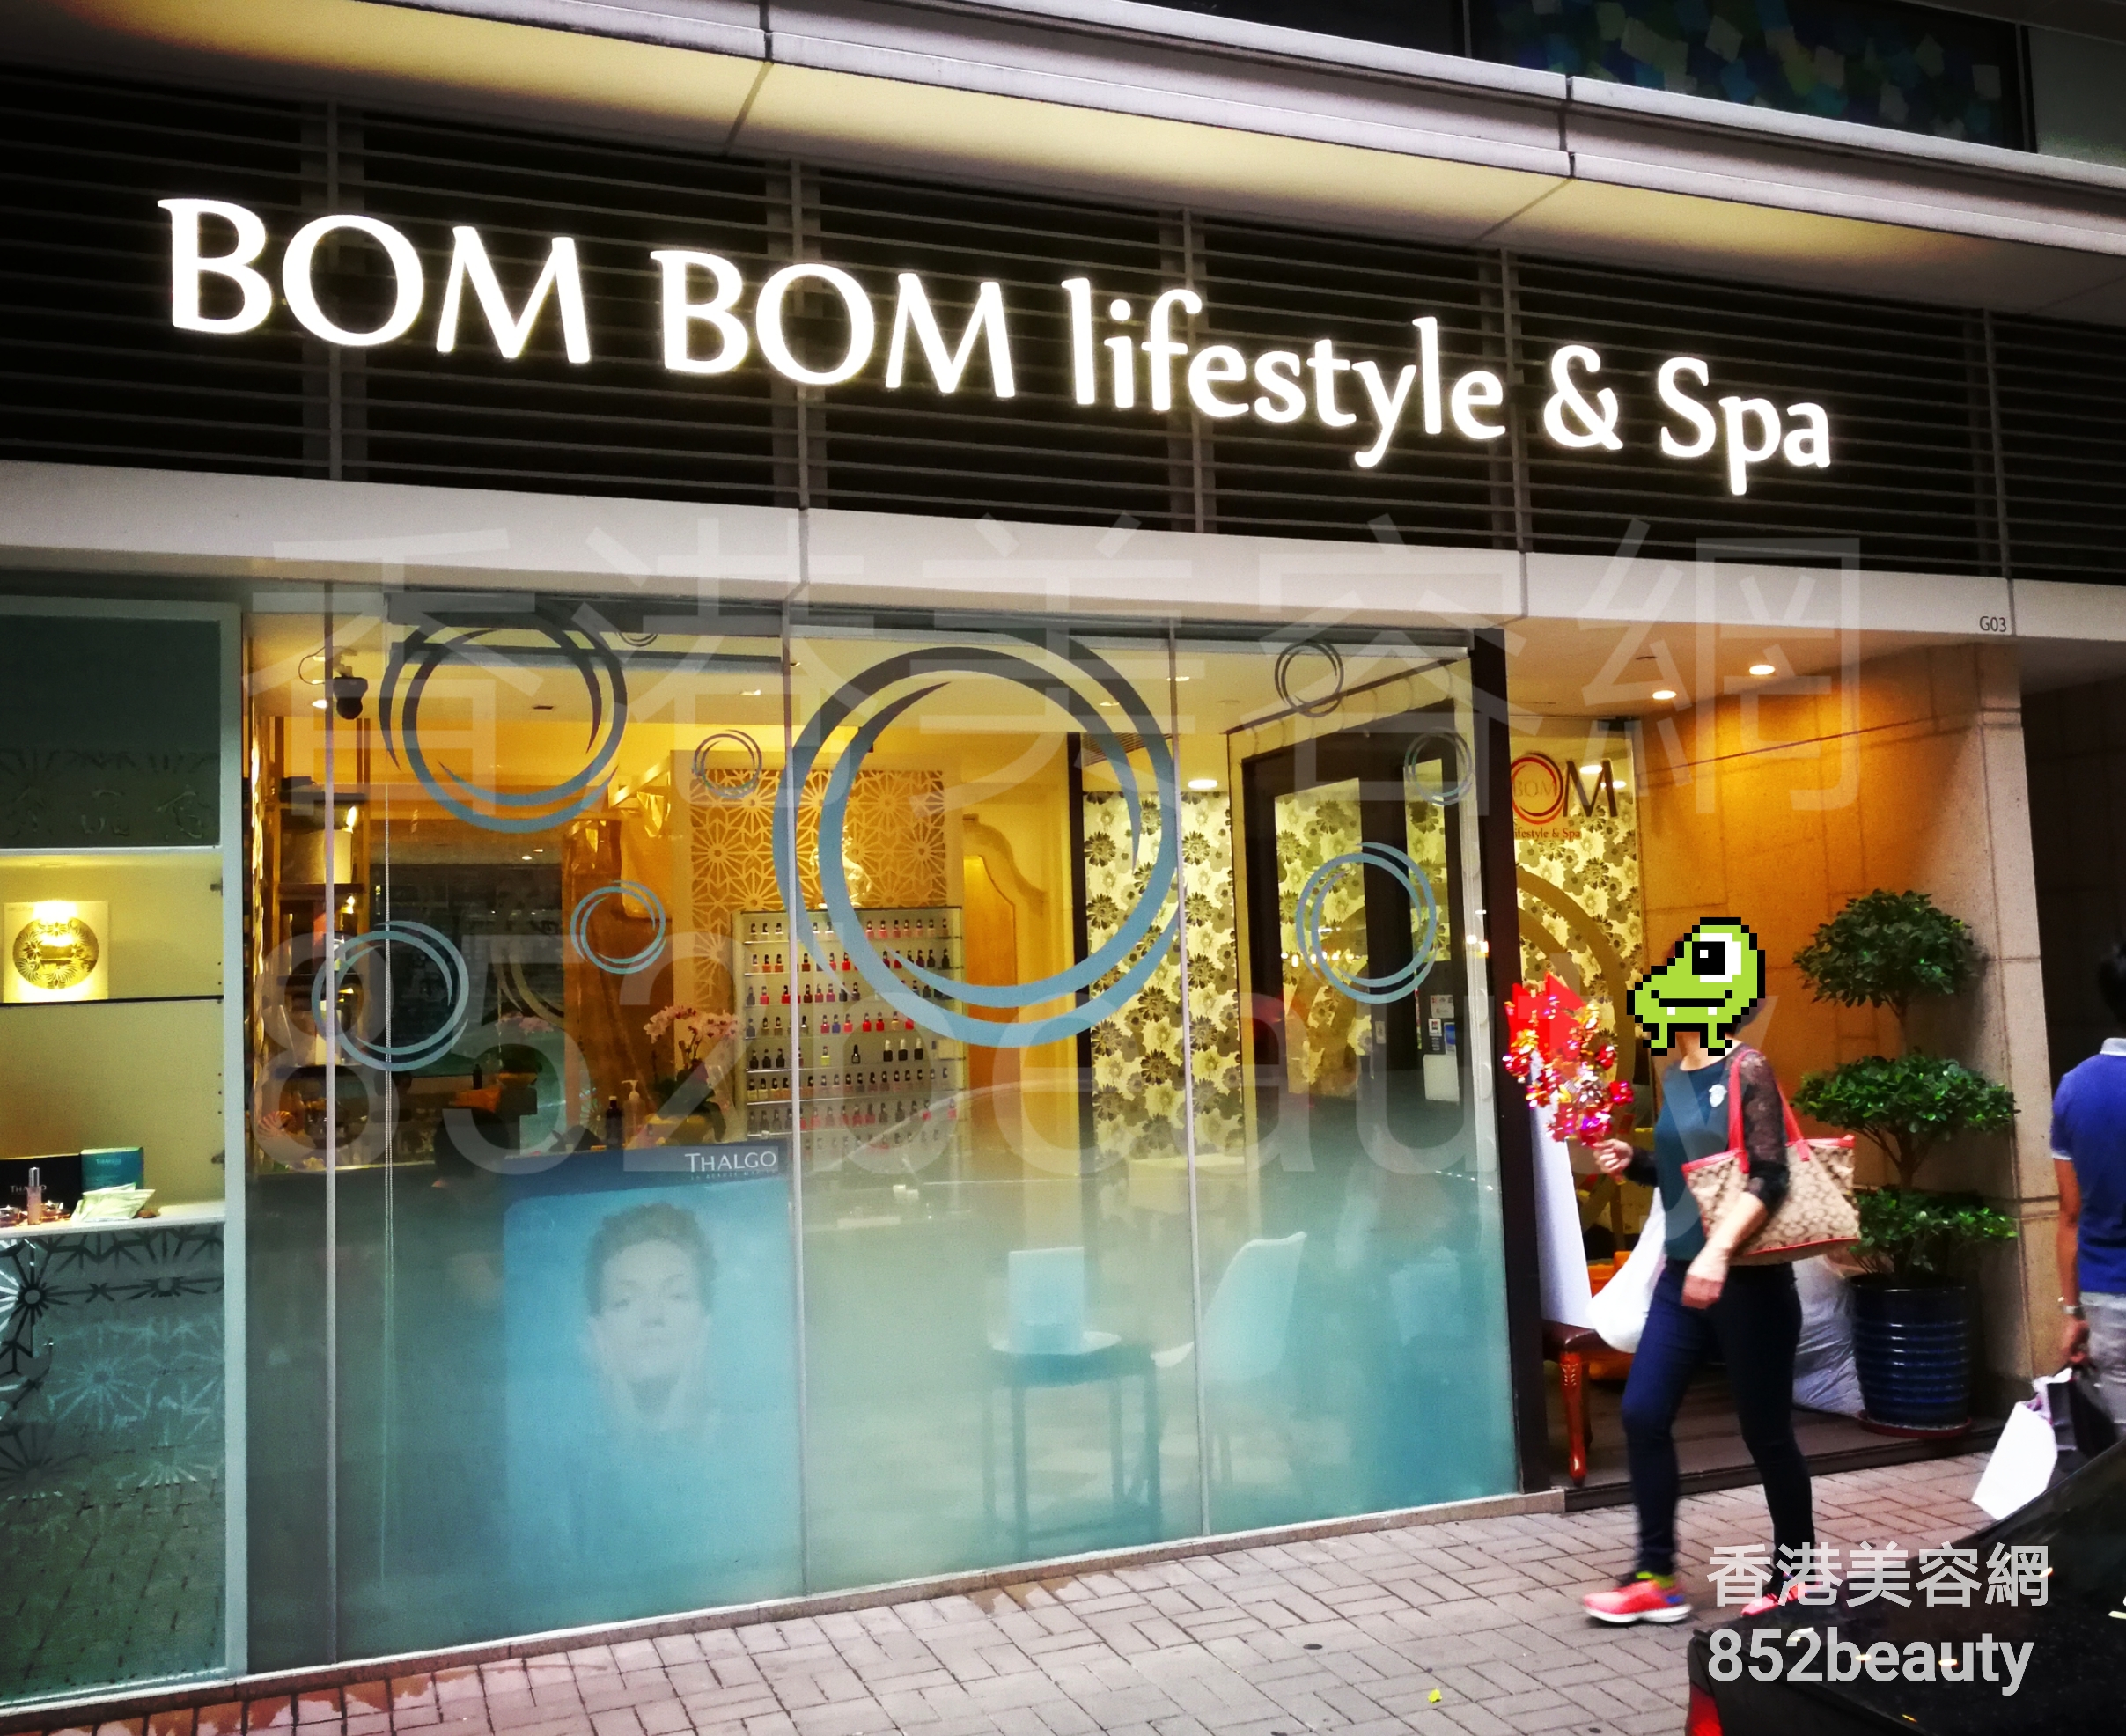 Beauty Salon / Beautician: BOM BOM lifestyle & Spa